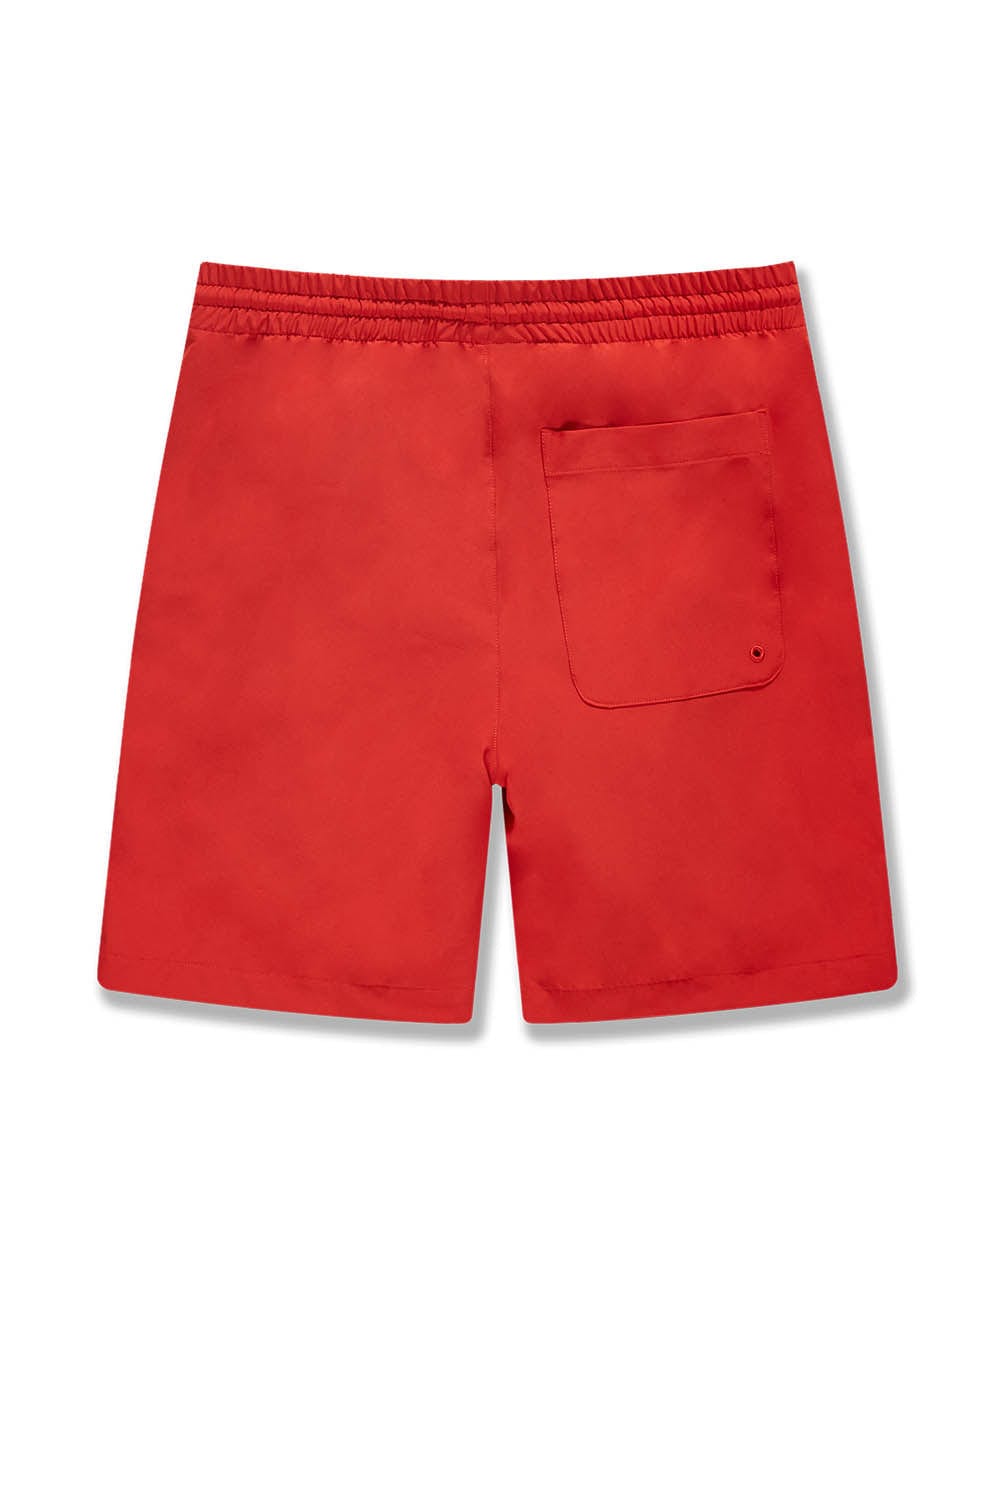 Jordan Craig Retro - El Paso Shorts (Red)